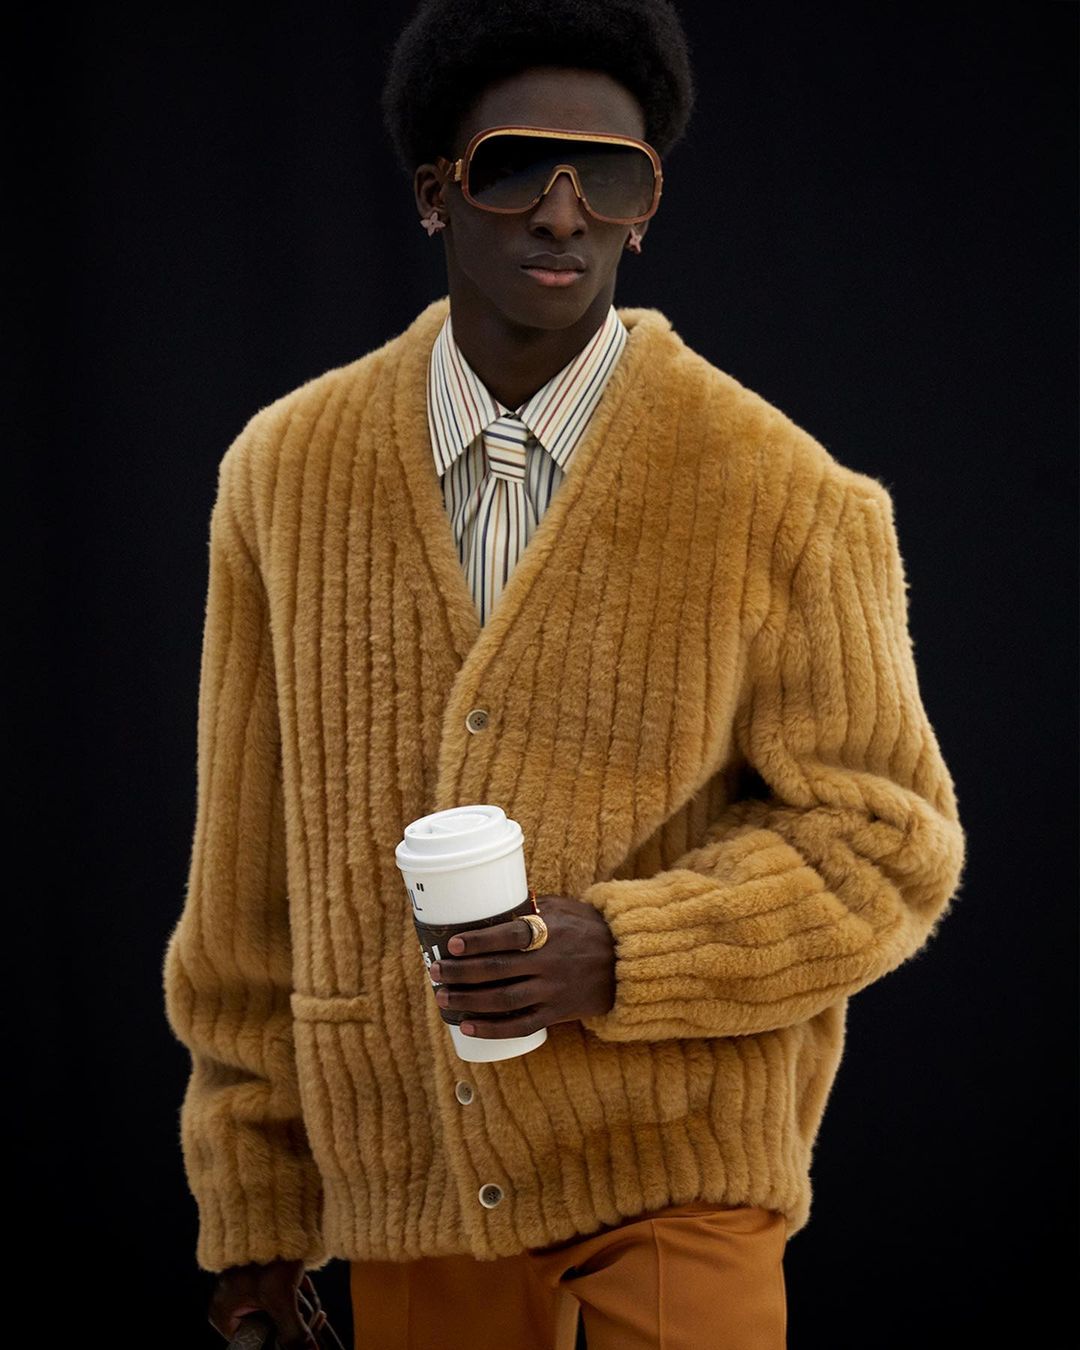 View Louis Vuitton Men's Collection: 'E B O N I C S' FW21